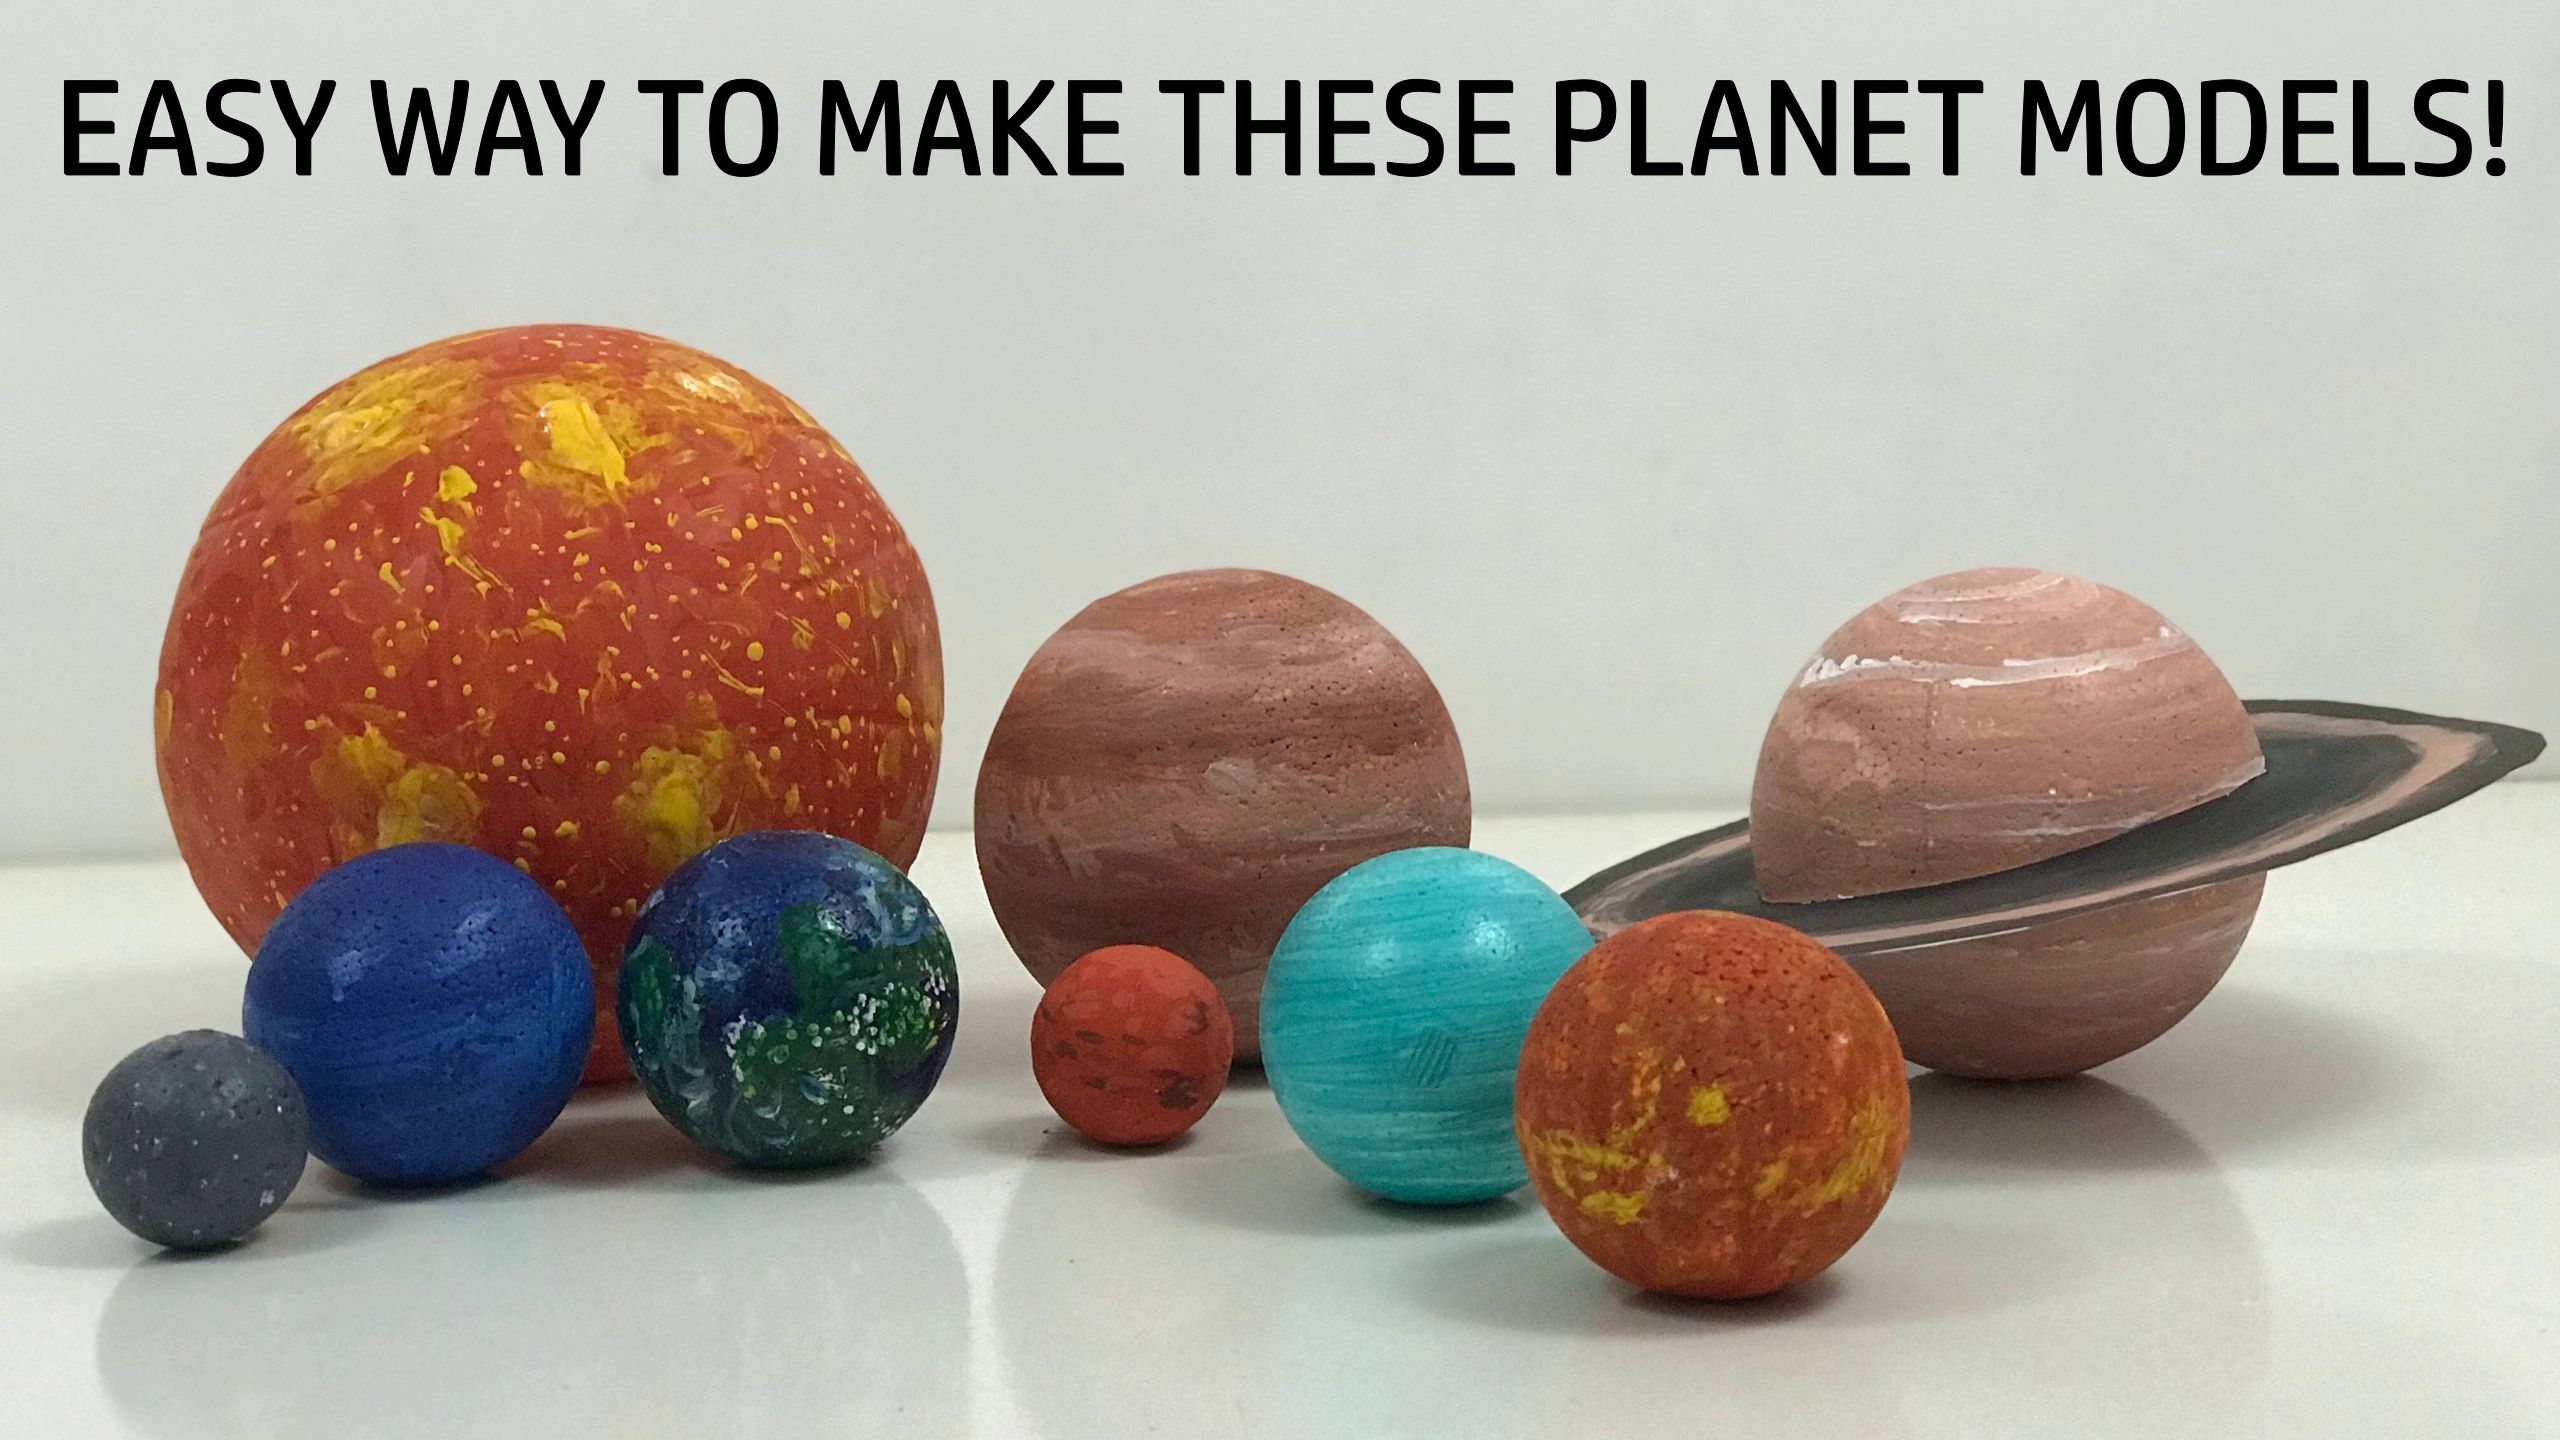 making solar system model